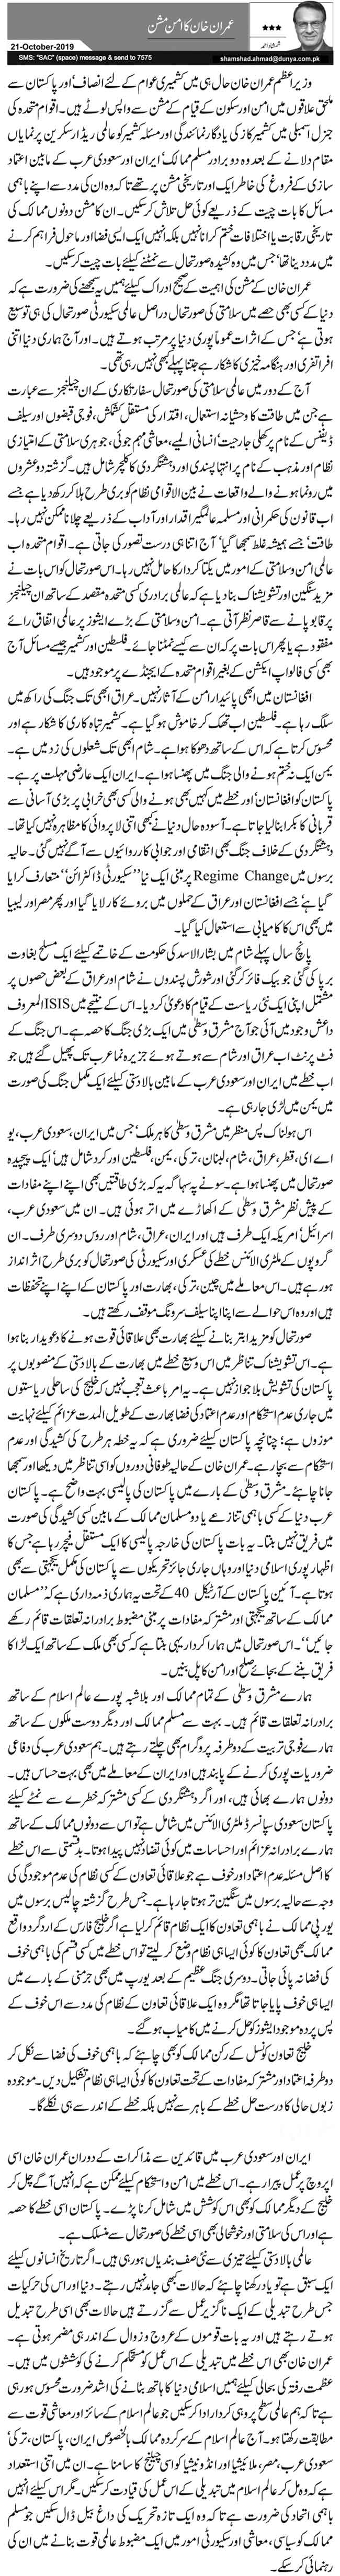 عمران خان کا امن مشن          